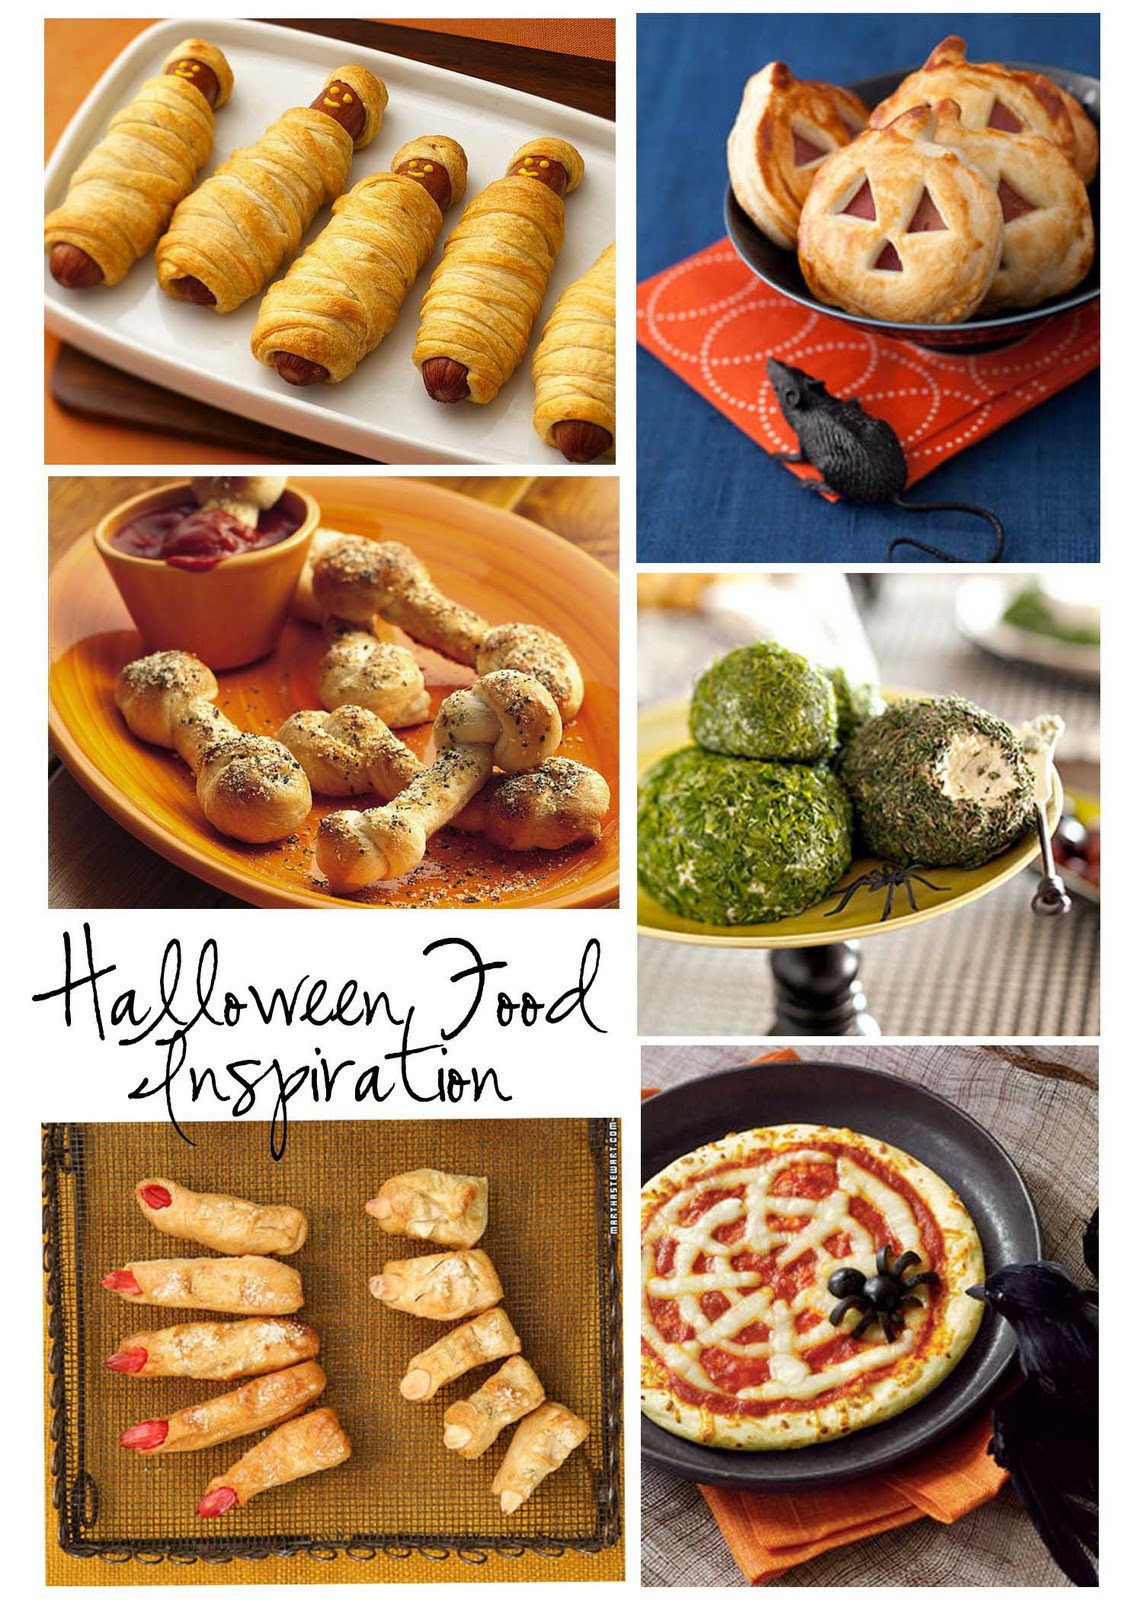 Fun Halloween Party Food Ideas
 Room to Inspire Spooky Food Ideas